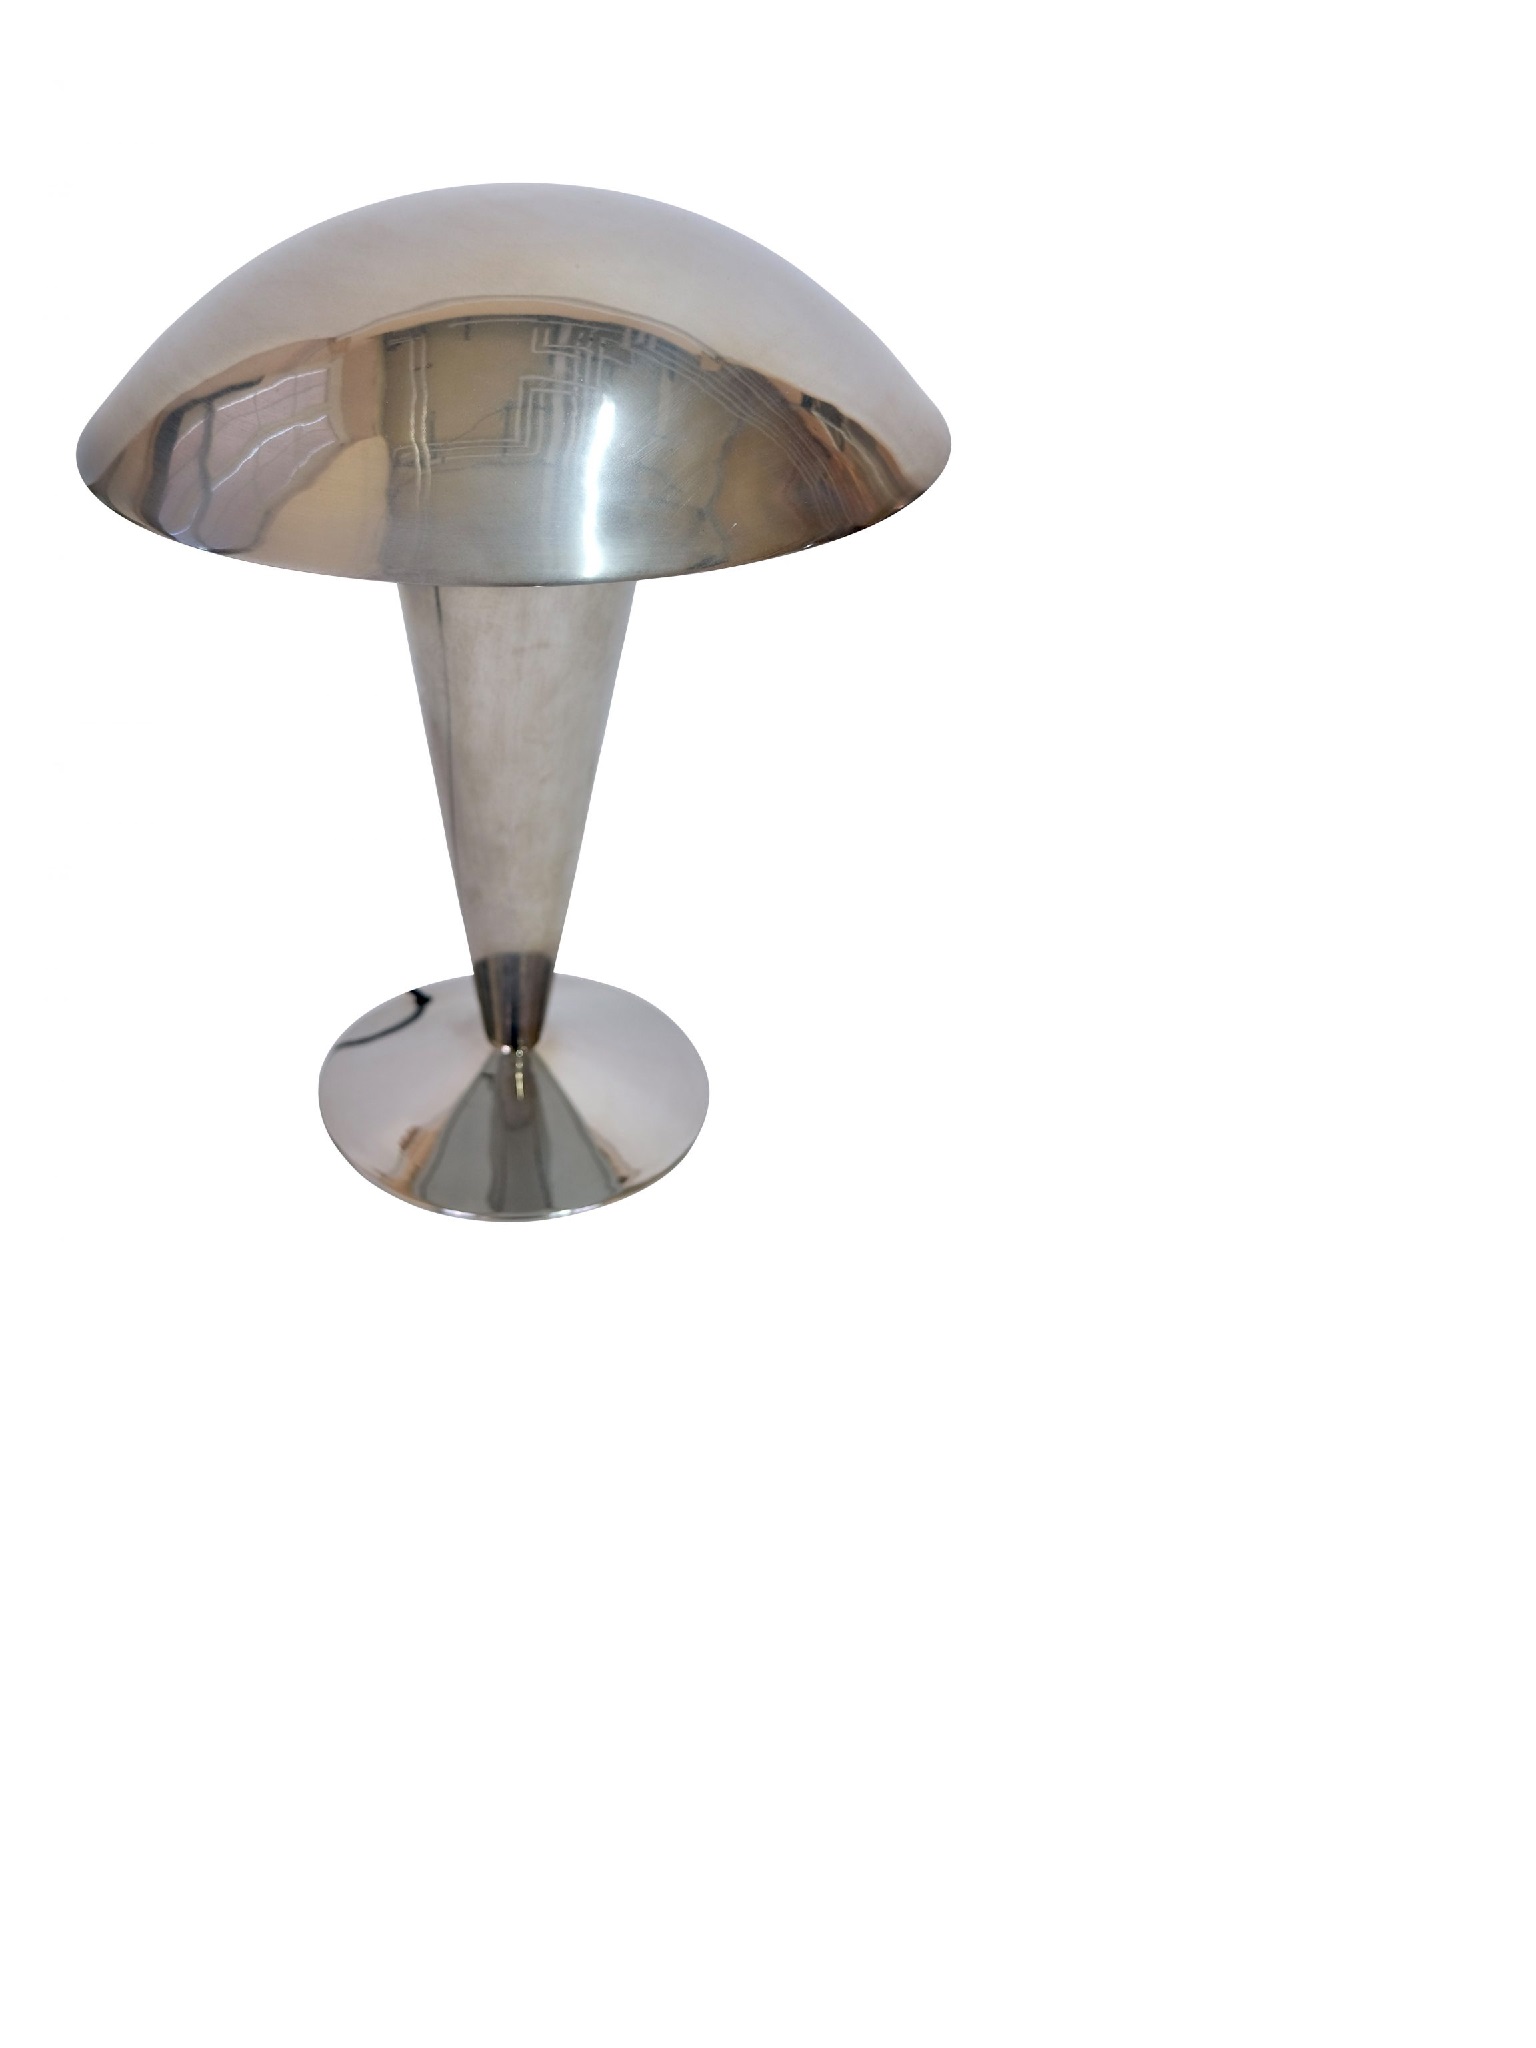 Large Art Deco table lamp